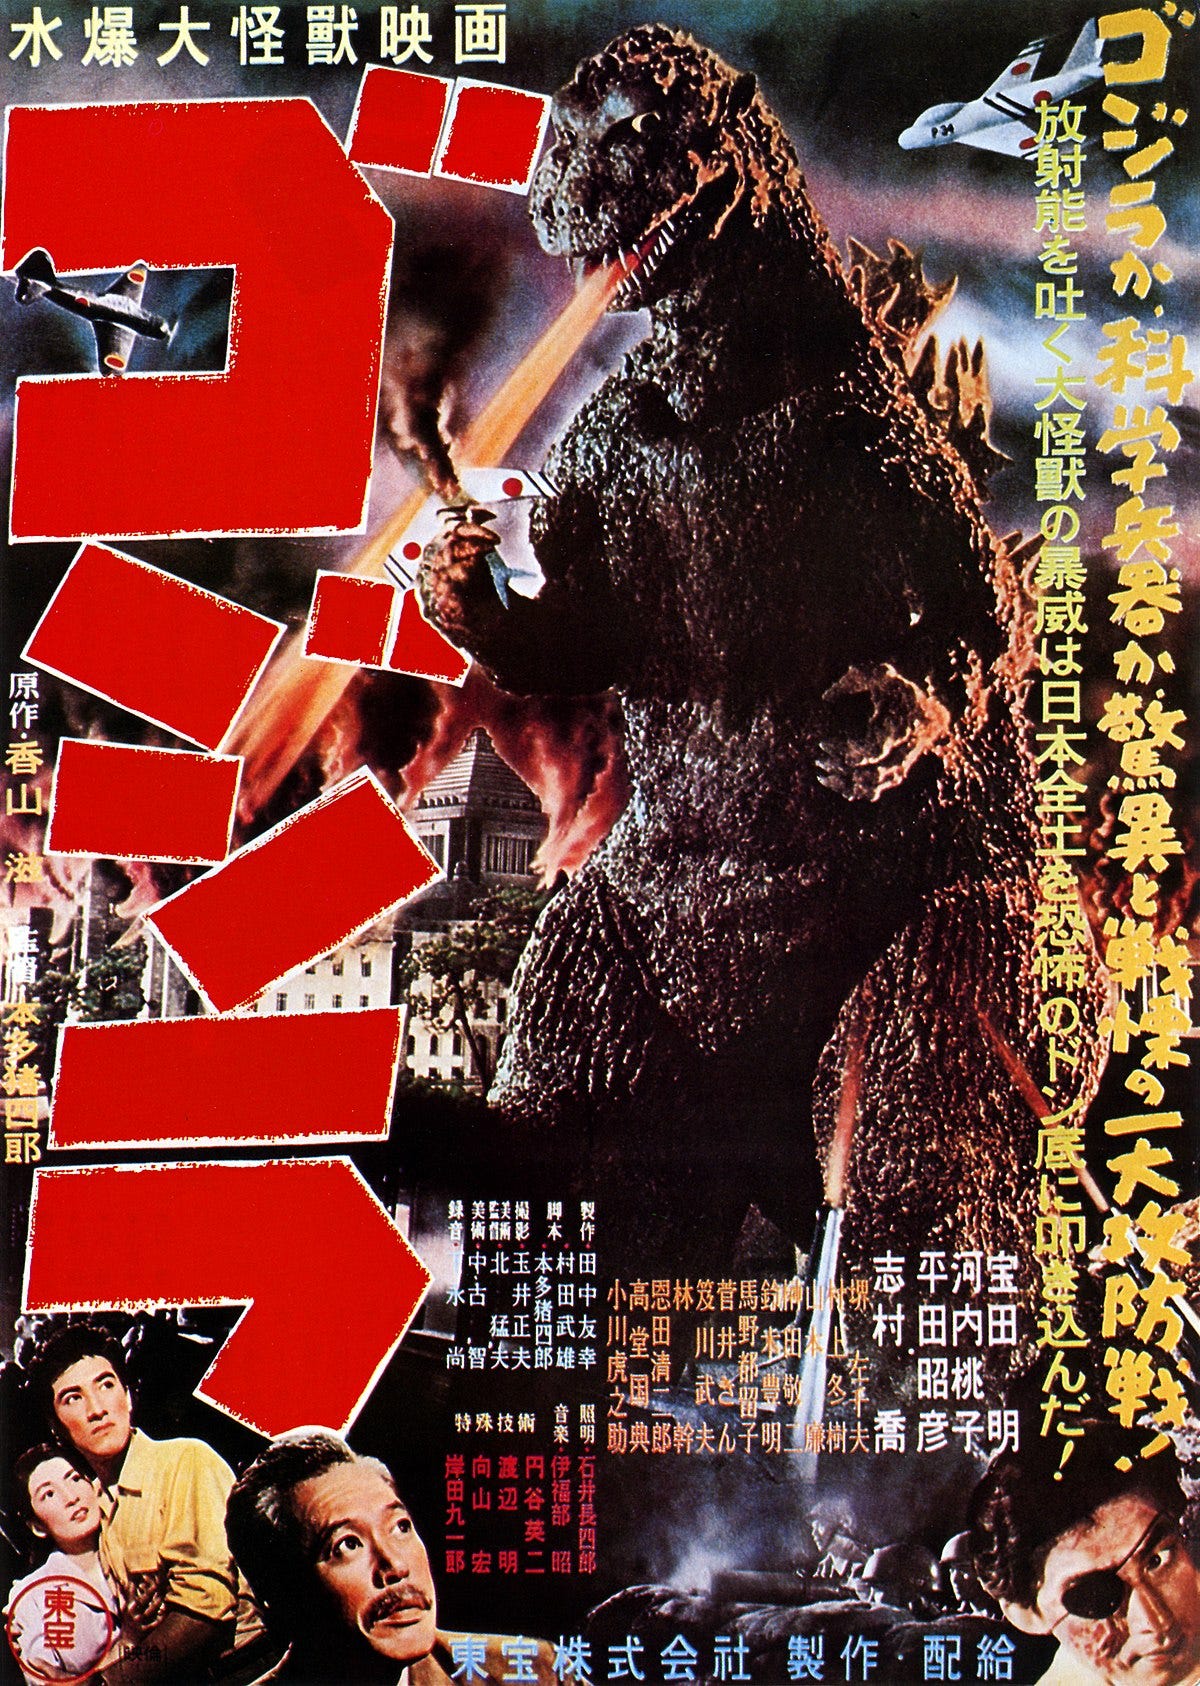 Godzilla (1954 film) - Wikipedia